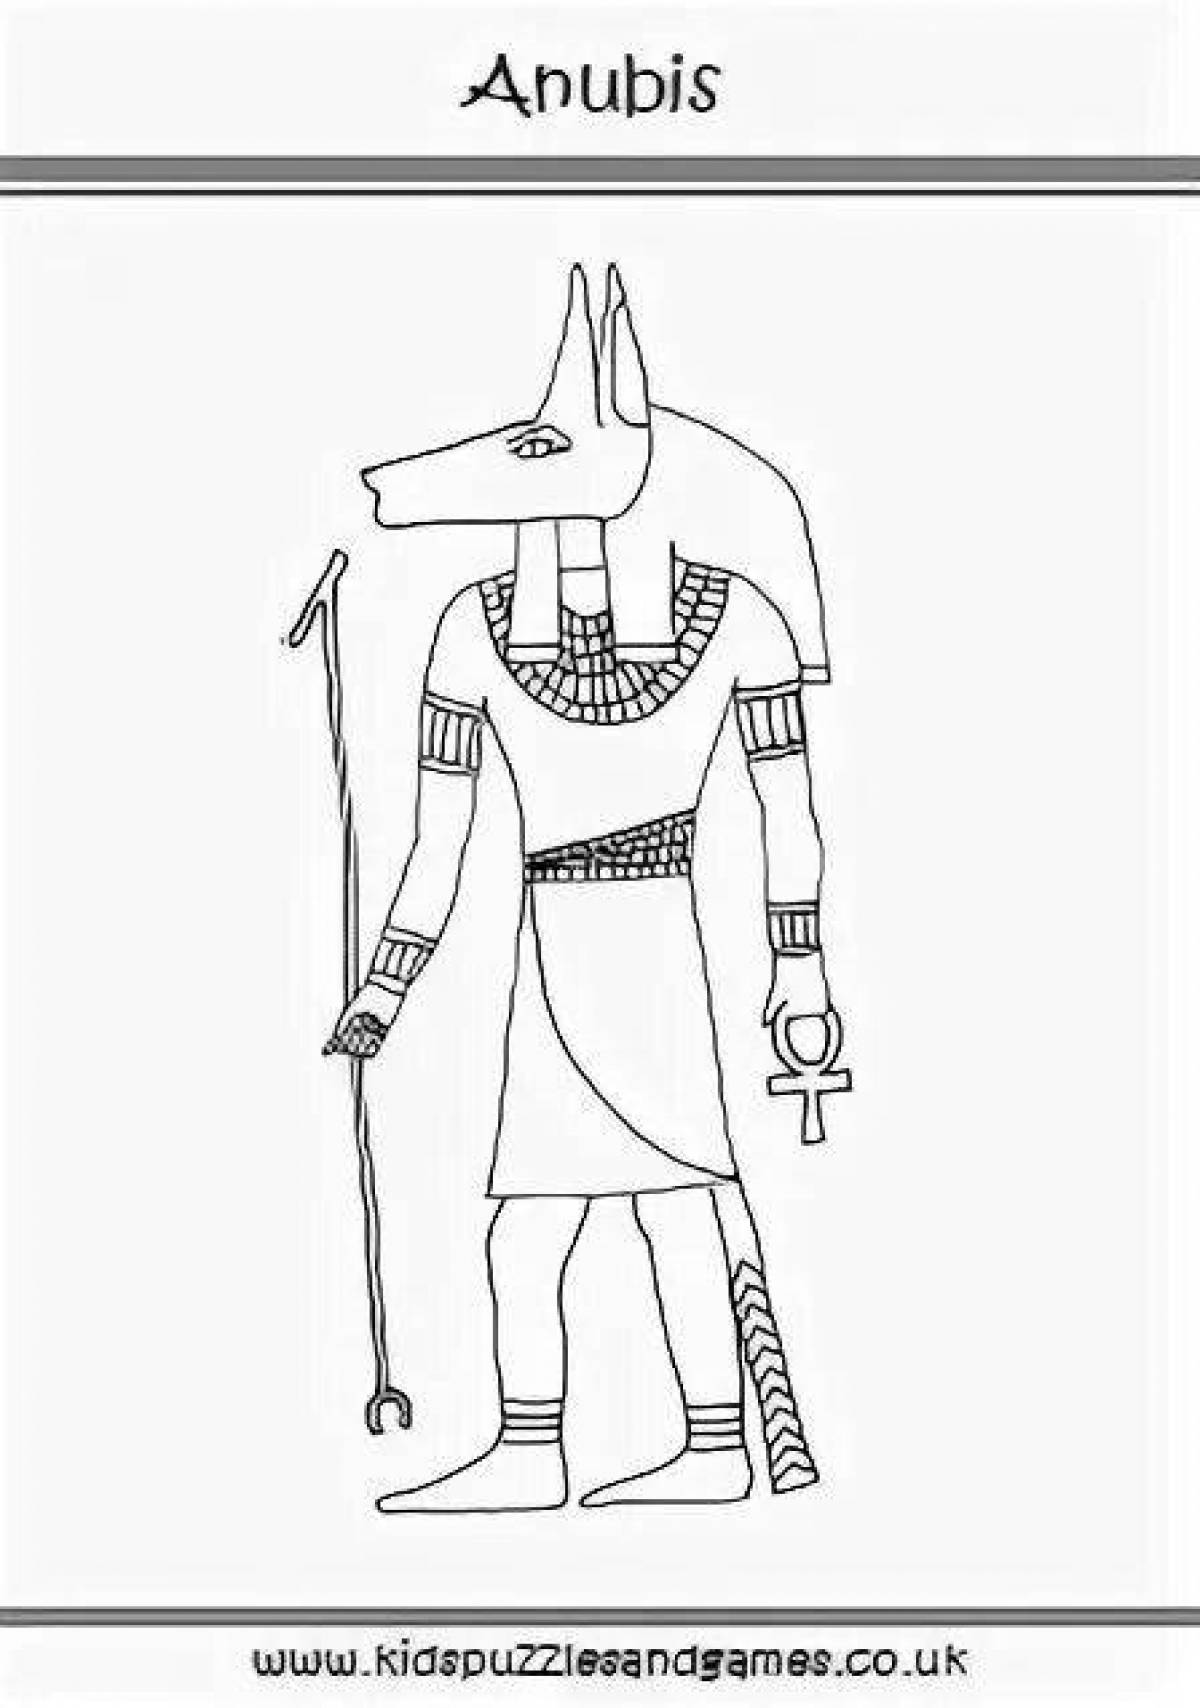 Anubis god of ancient egypt #2